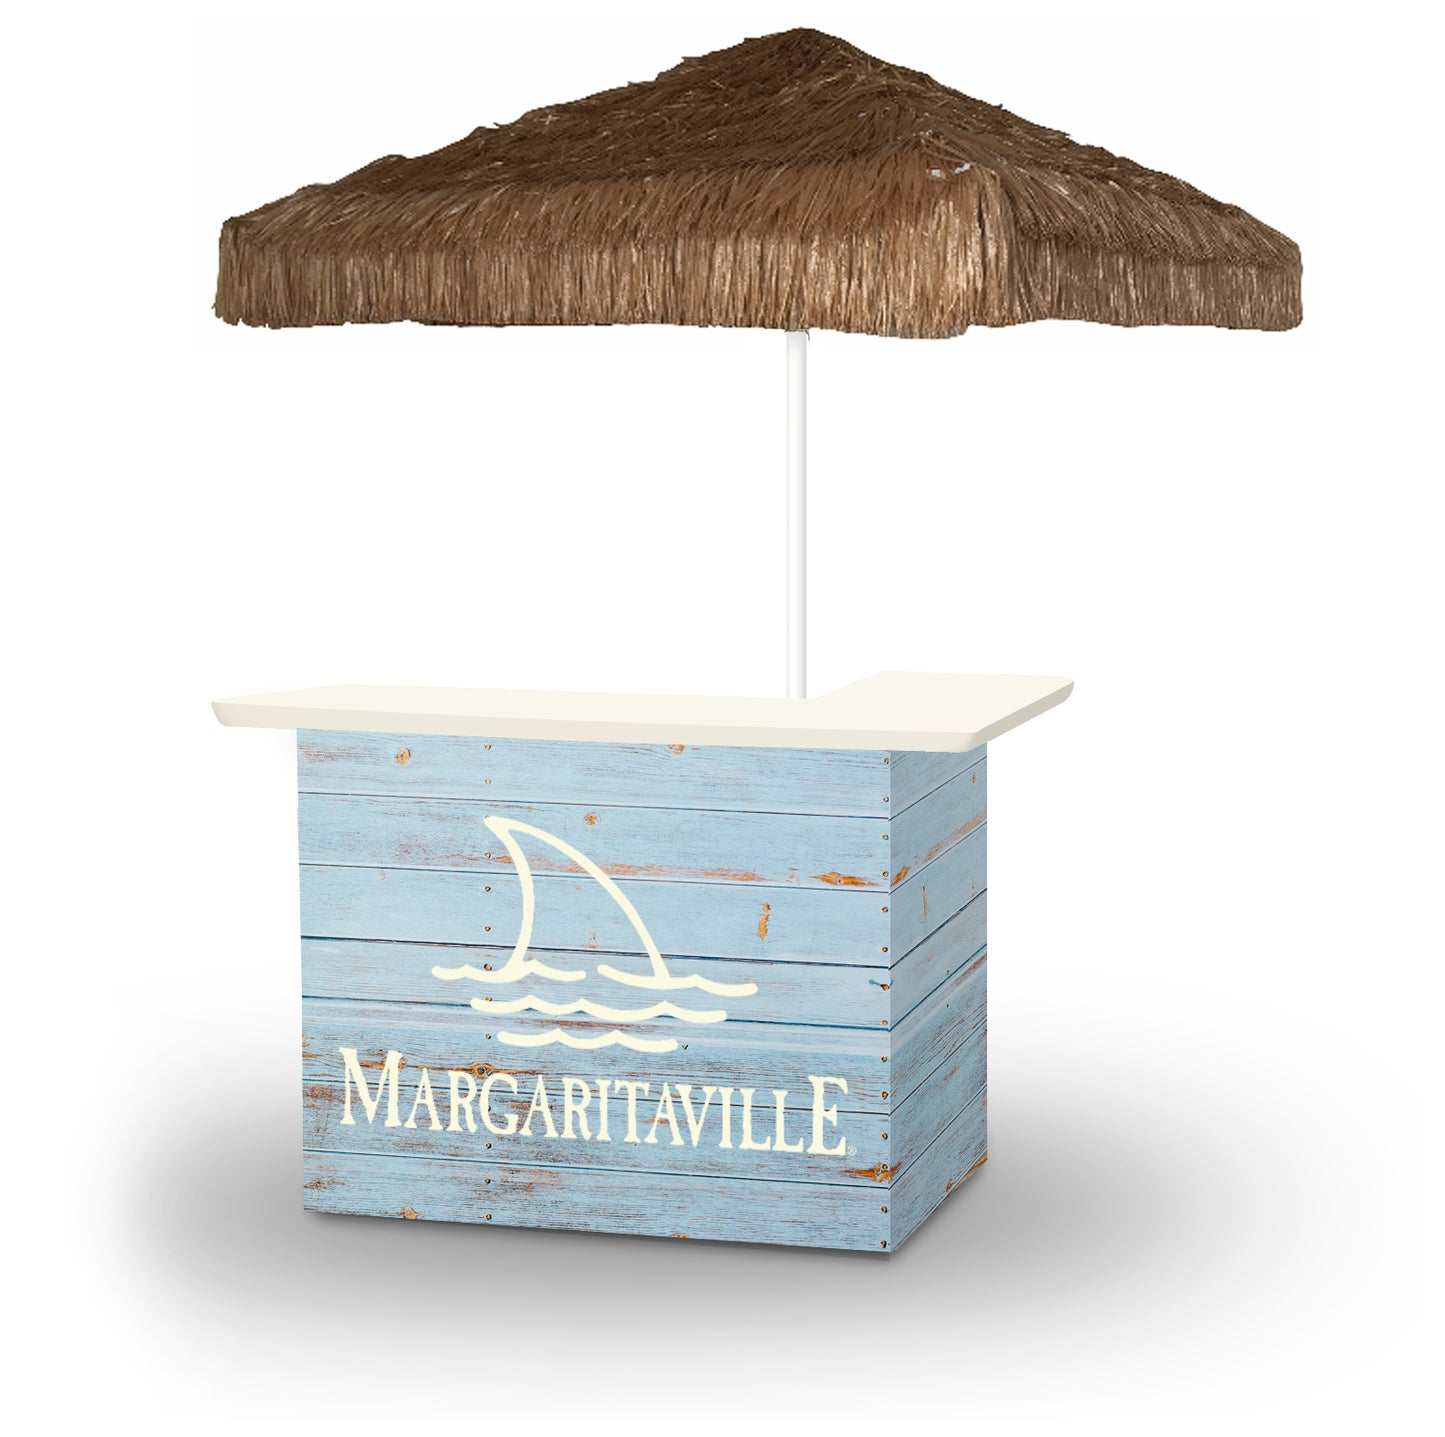 Margaritaville - Blue Waters Shark Fin